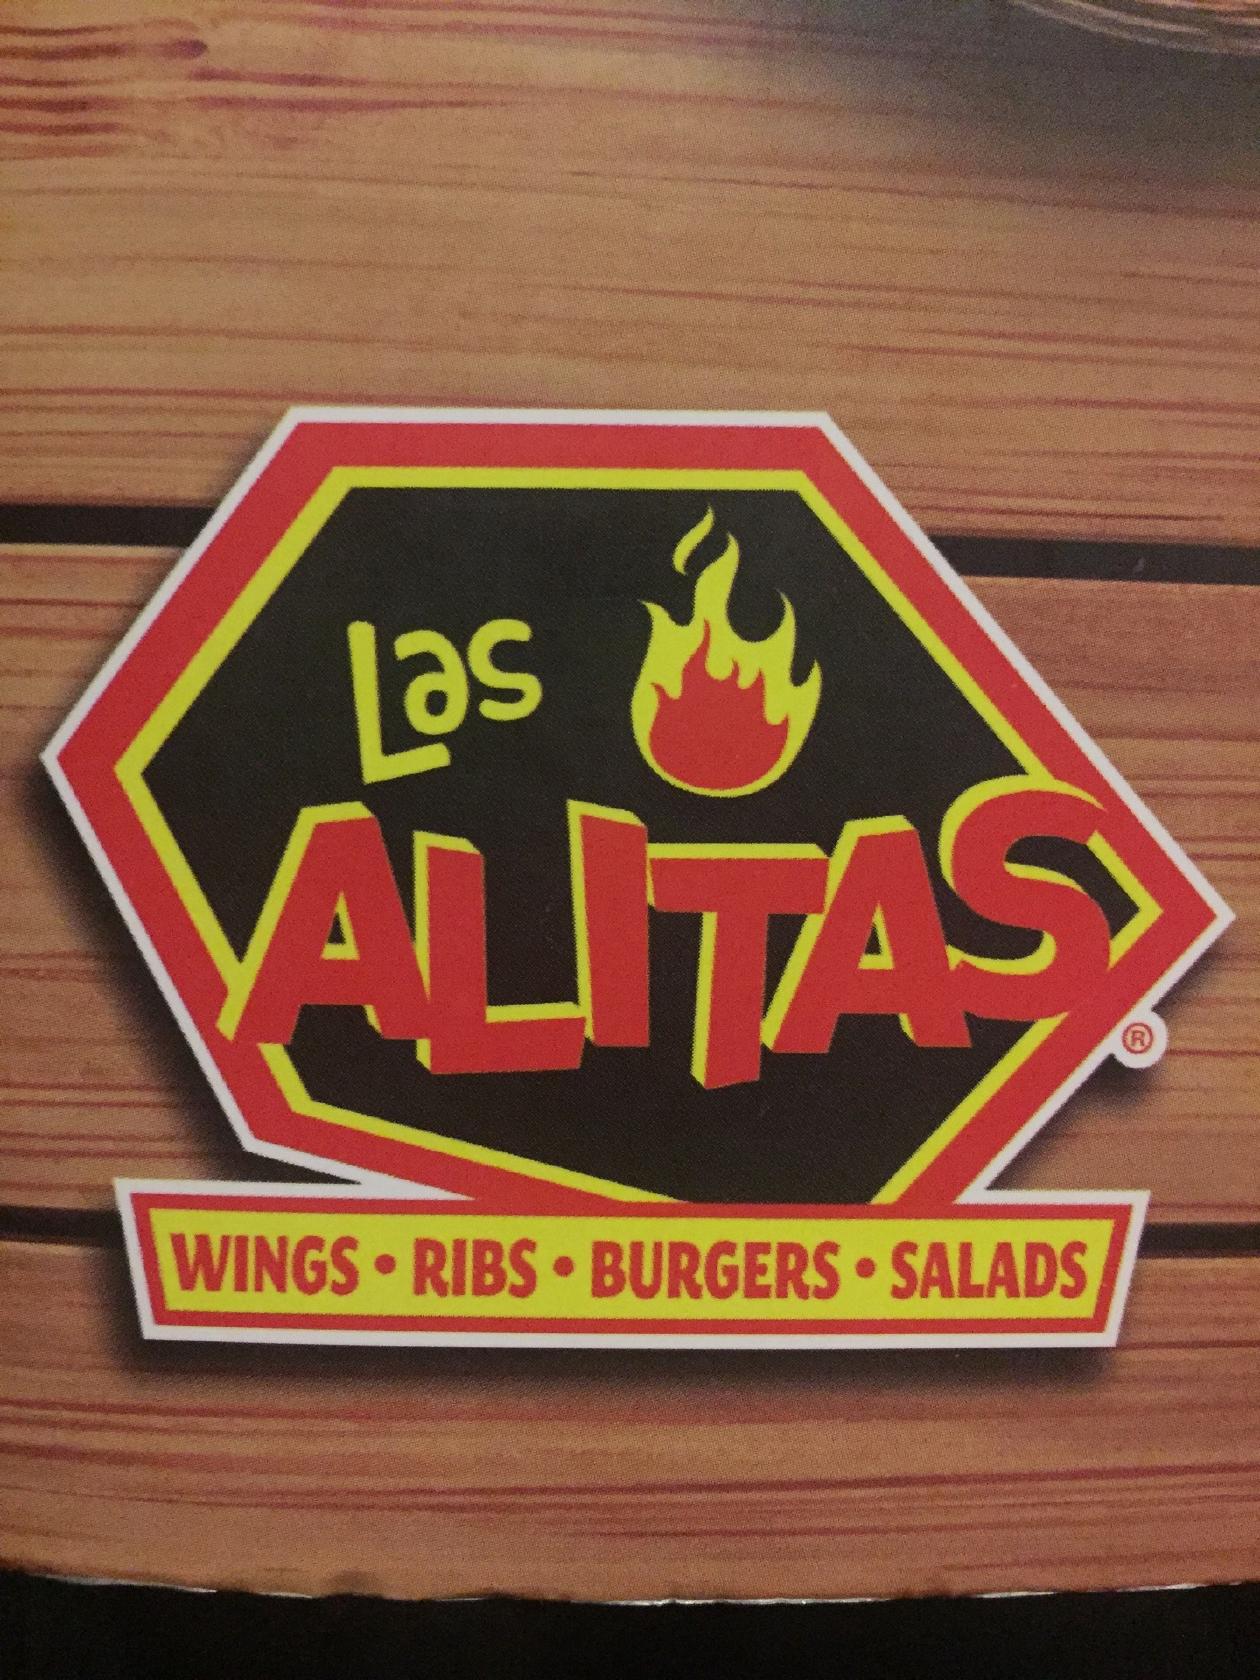 Las Alitas Satélite restaurant, Monterrey, Av Eugenio Garza Sada 6115 -  Restaurant menu and reviews